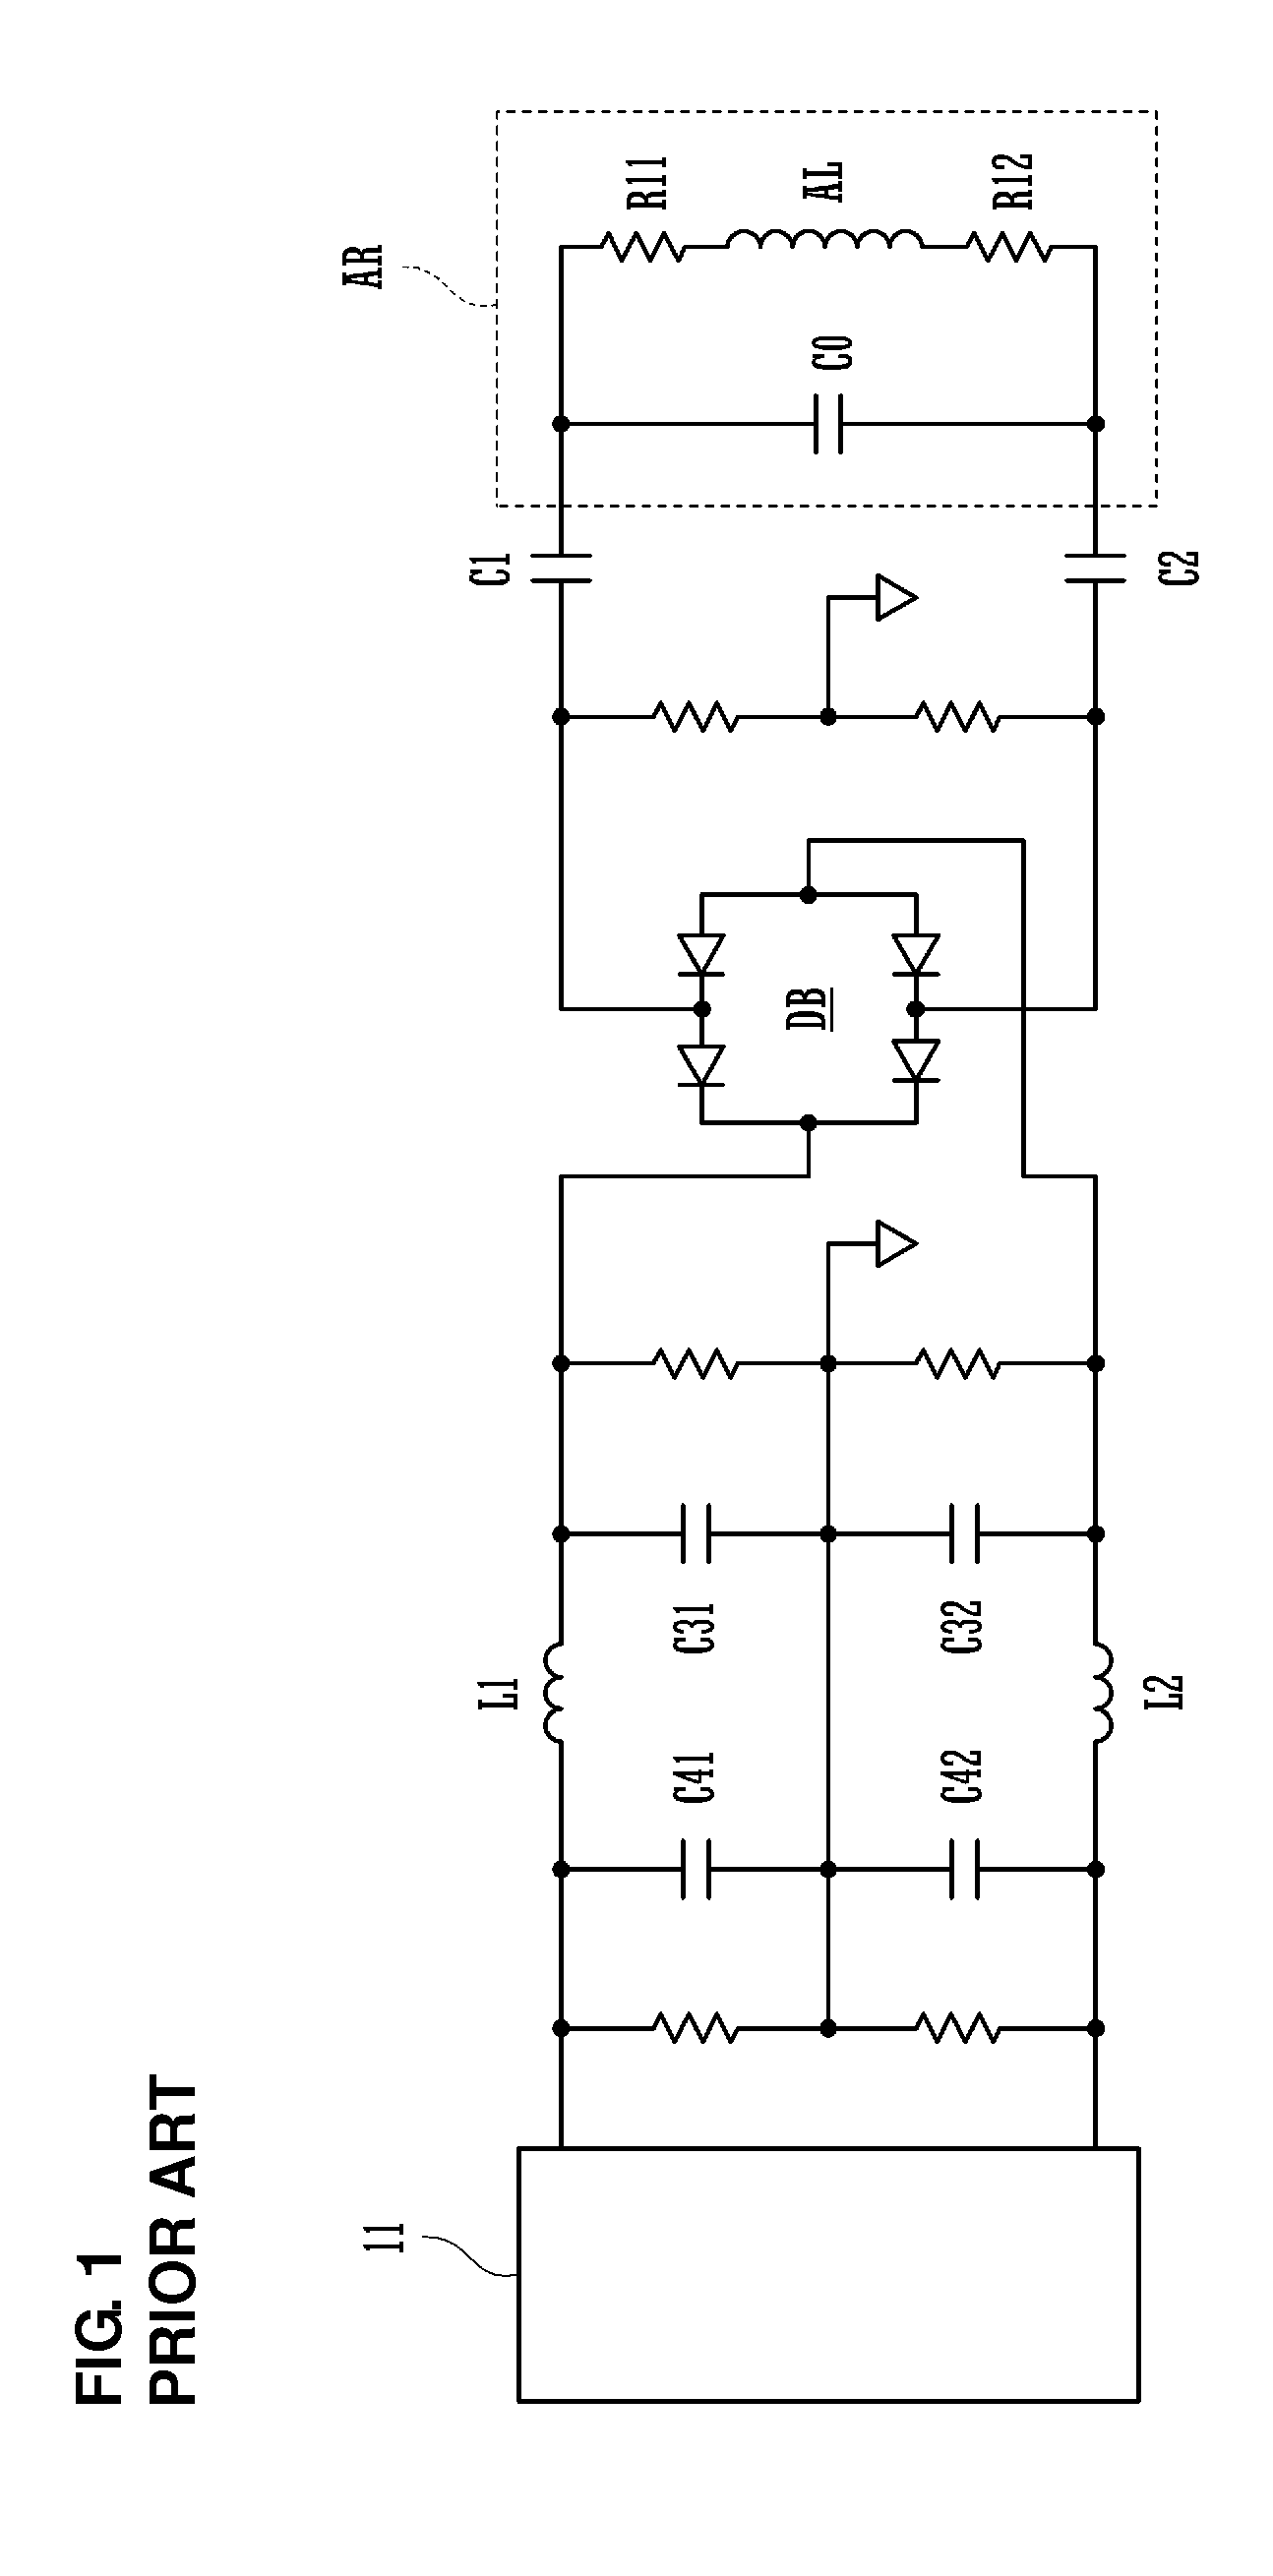 Signal processing circuit and antenna apparatus